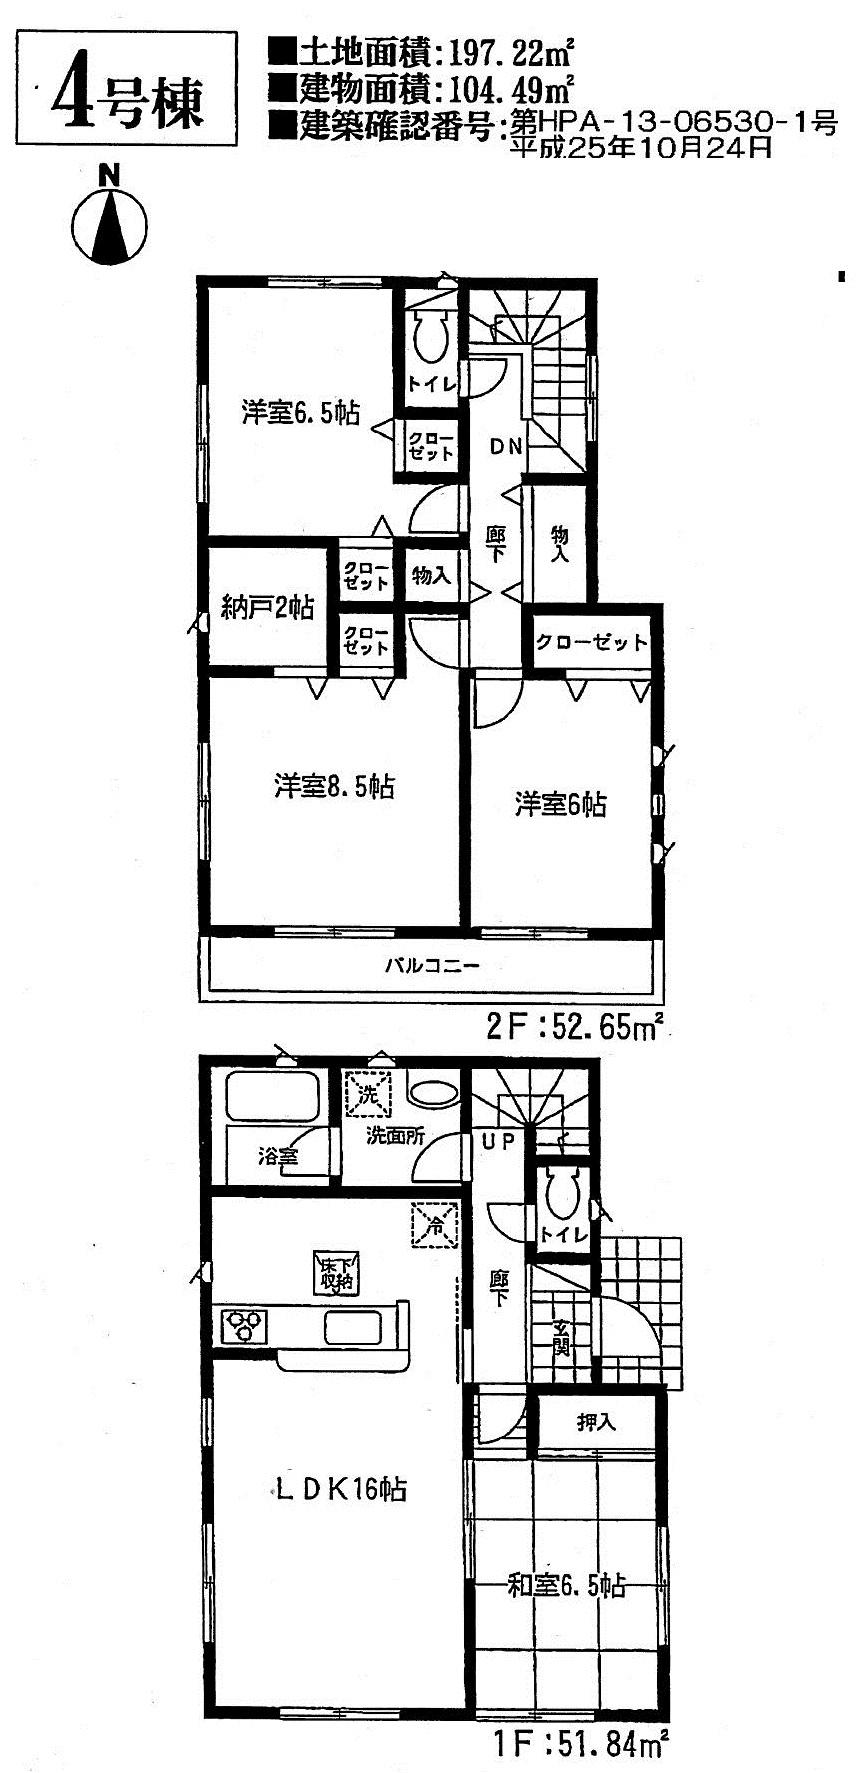 Floor plan. (4 Building), Price 19,800,000 yen, 4LDK+S, Land area 197.22 sq m , Building area 104.49 sq m